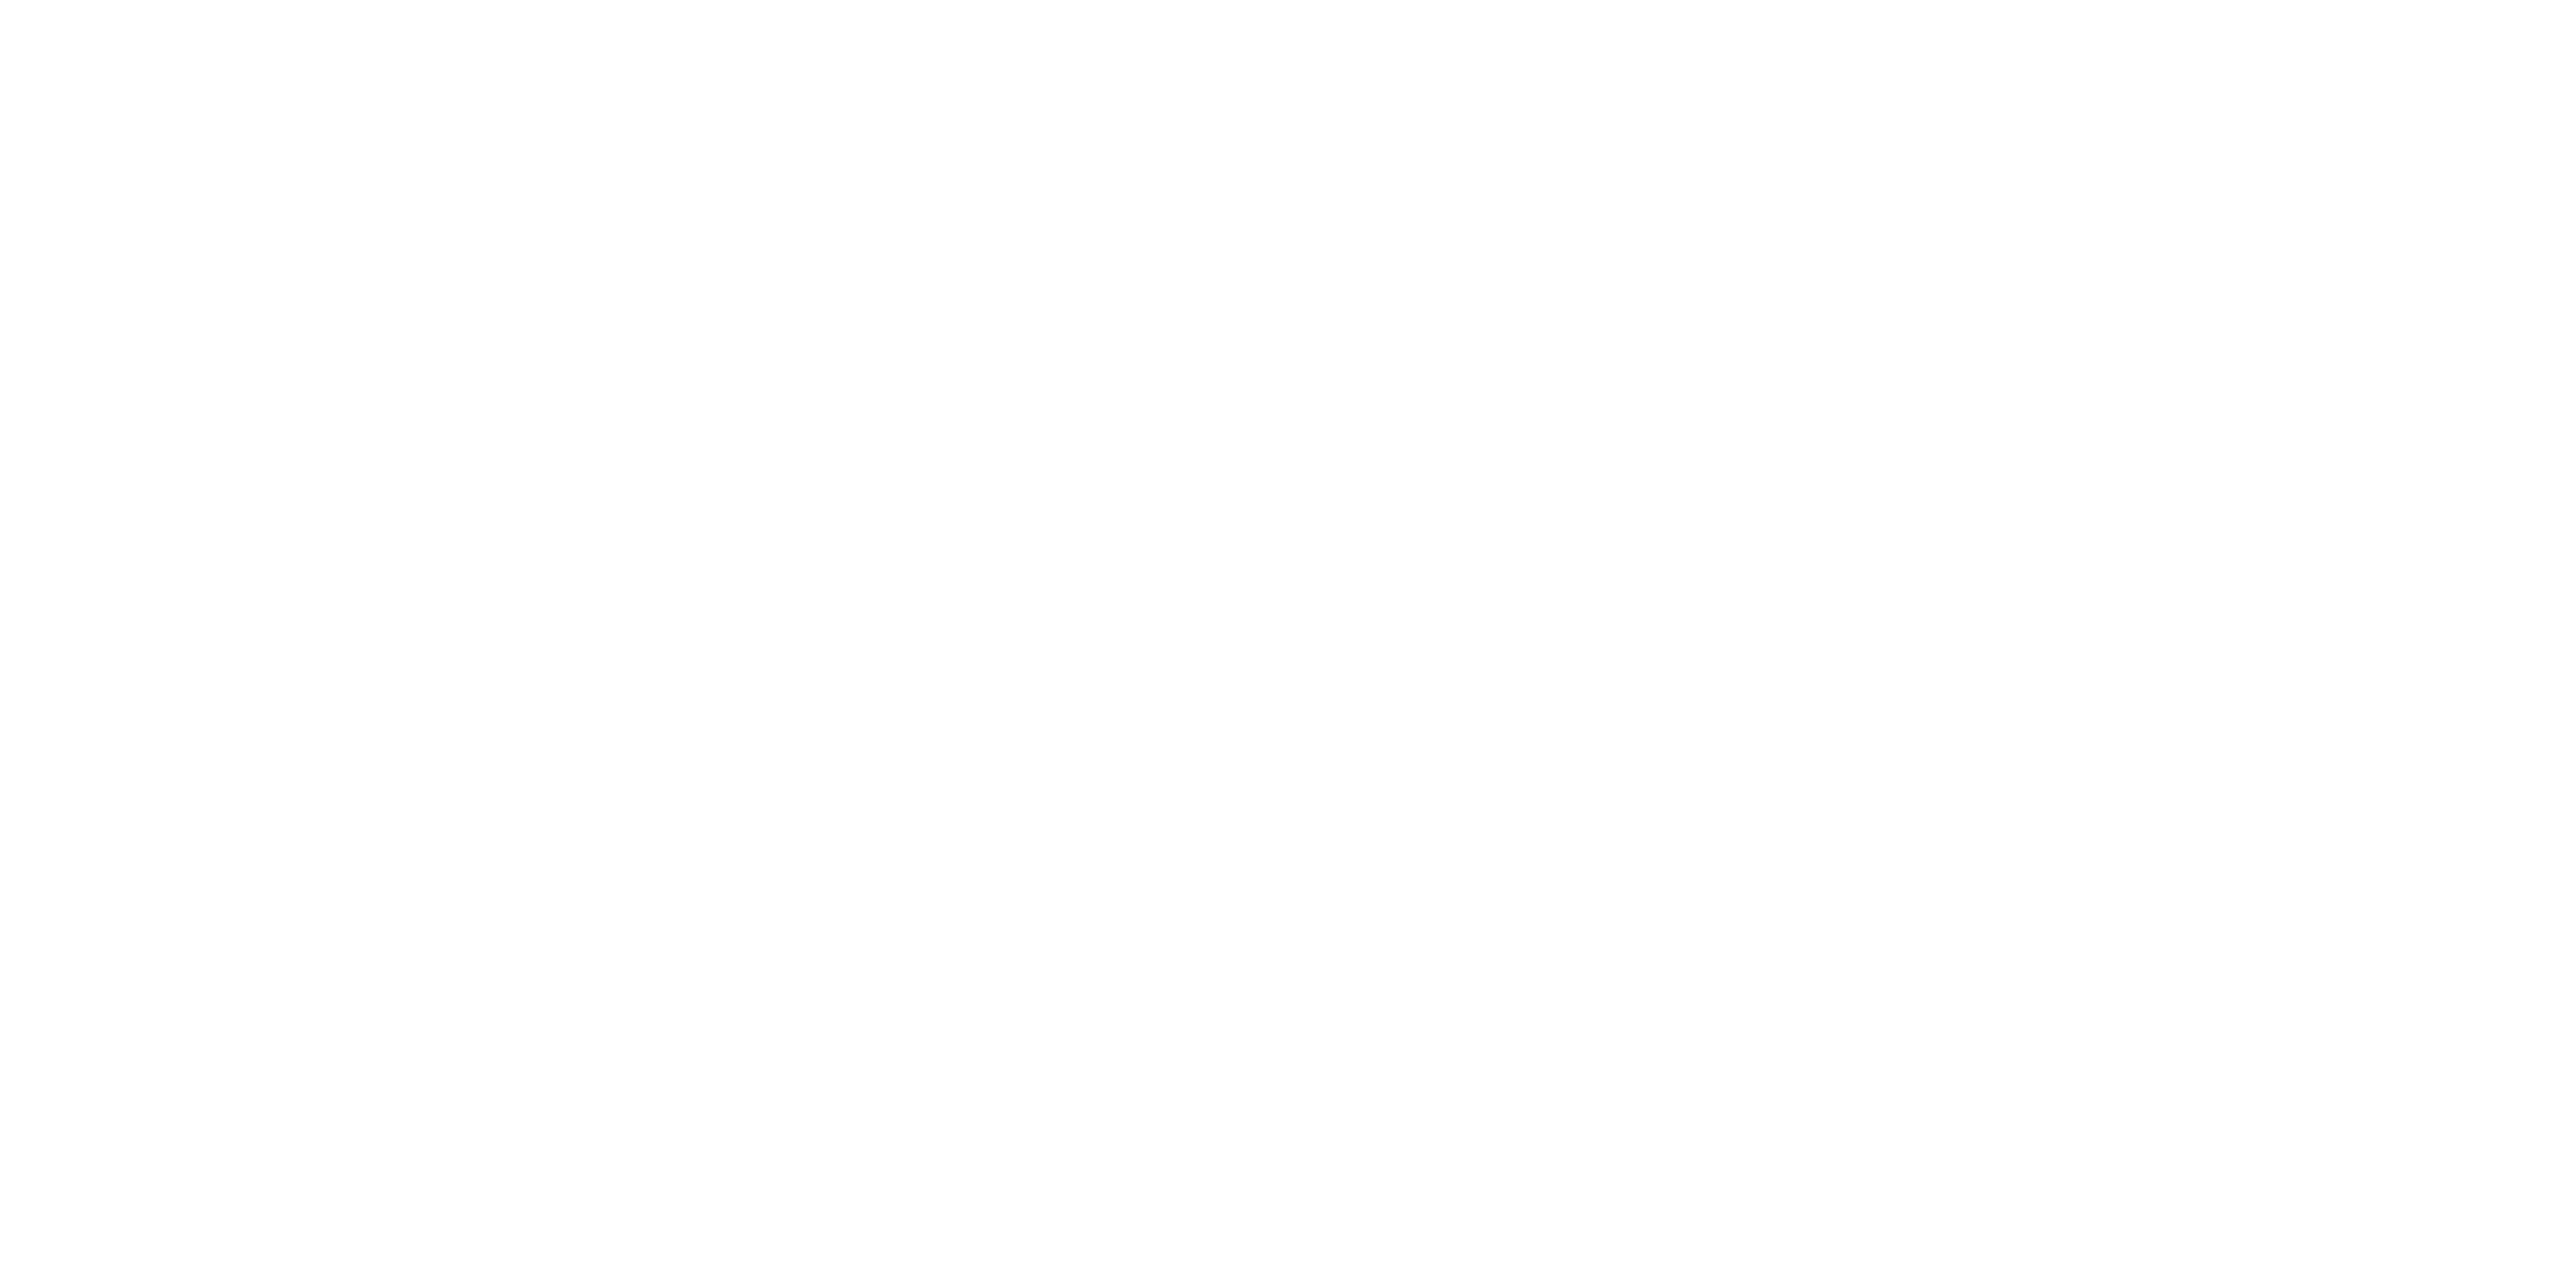 TVC Panorama